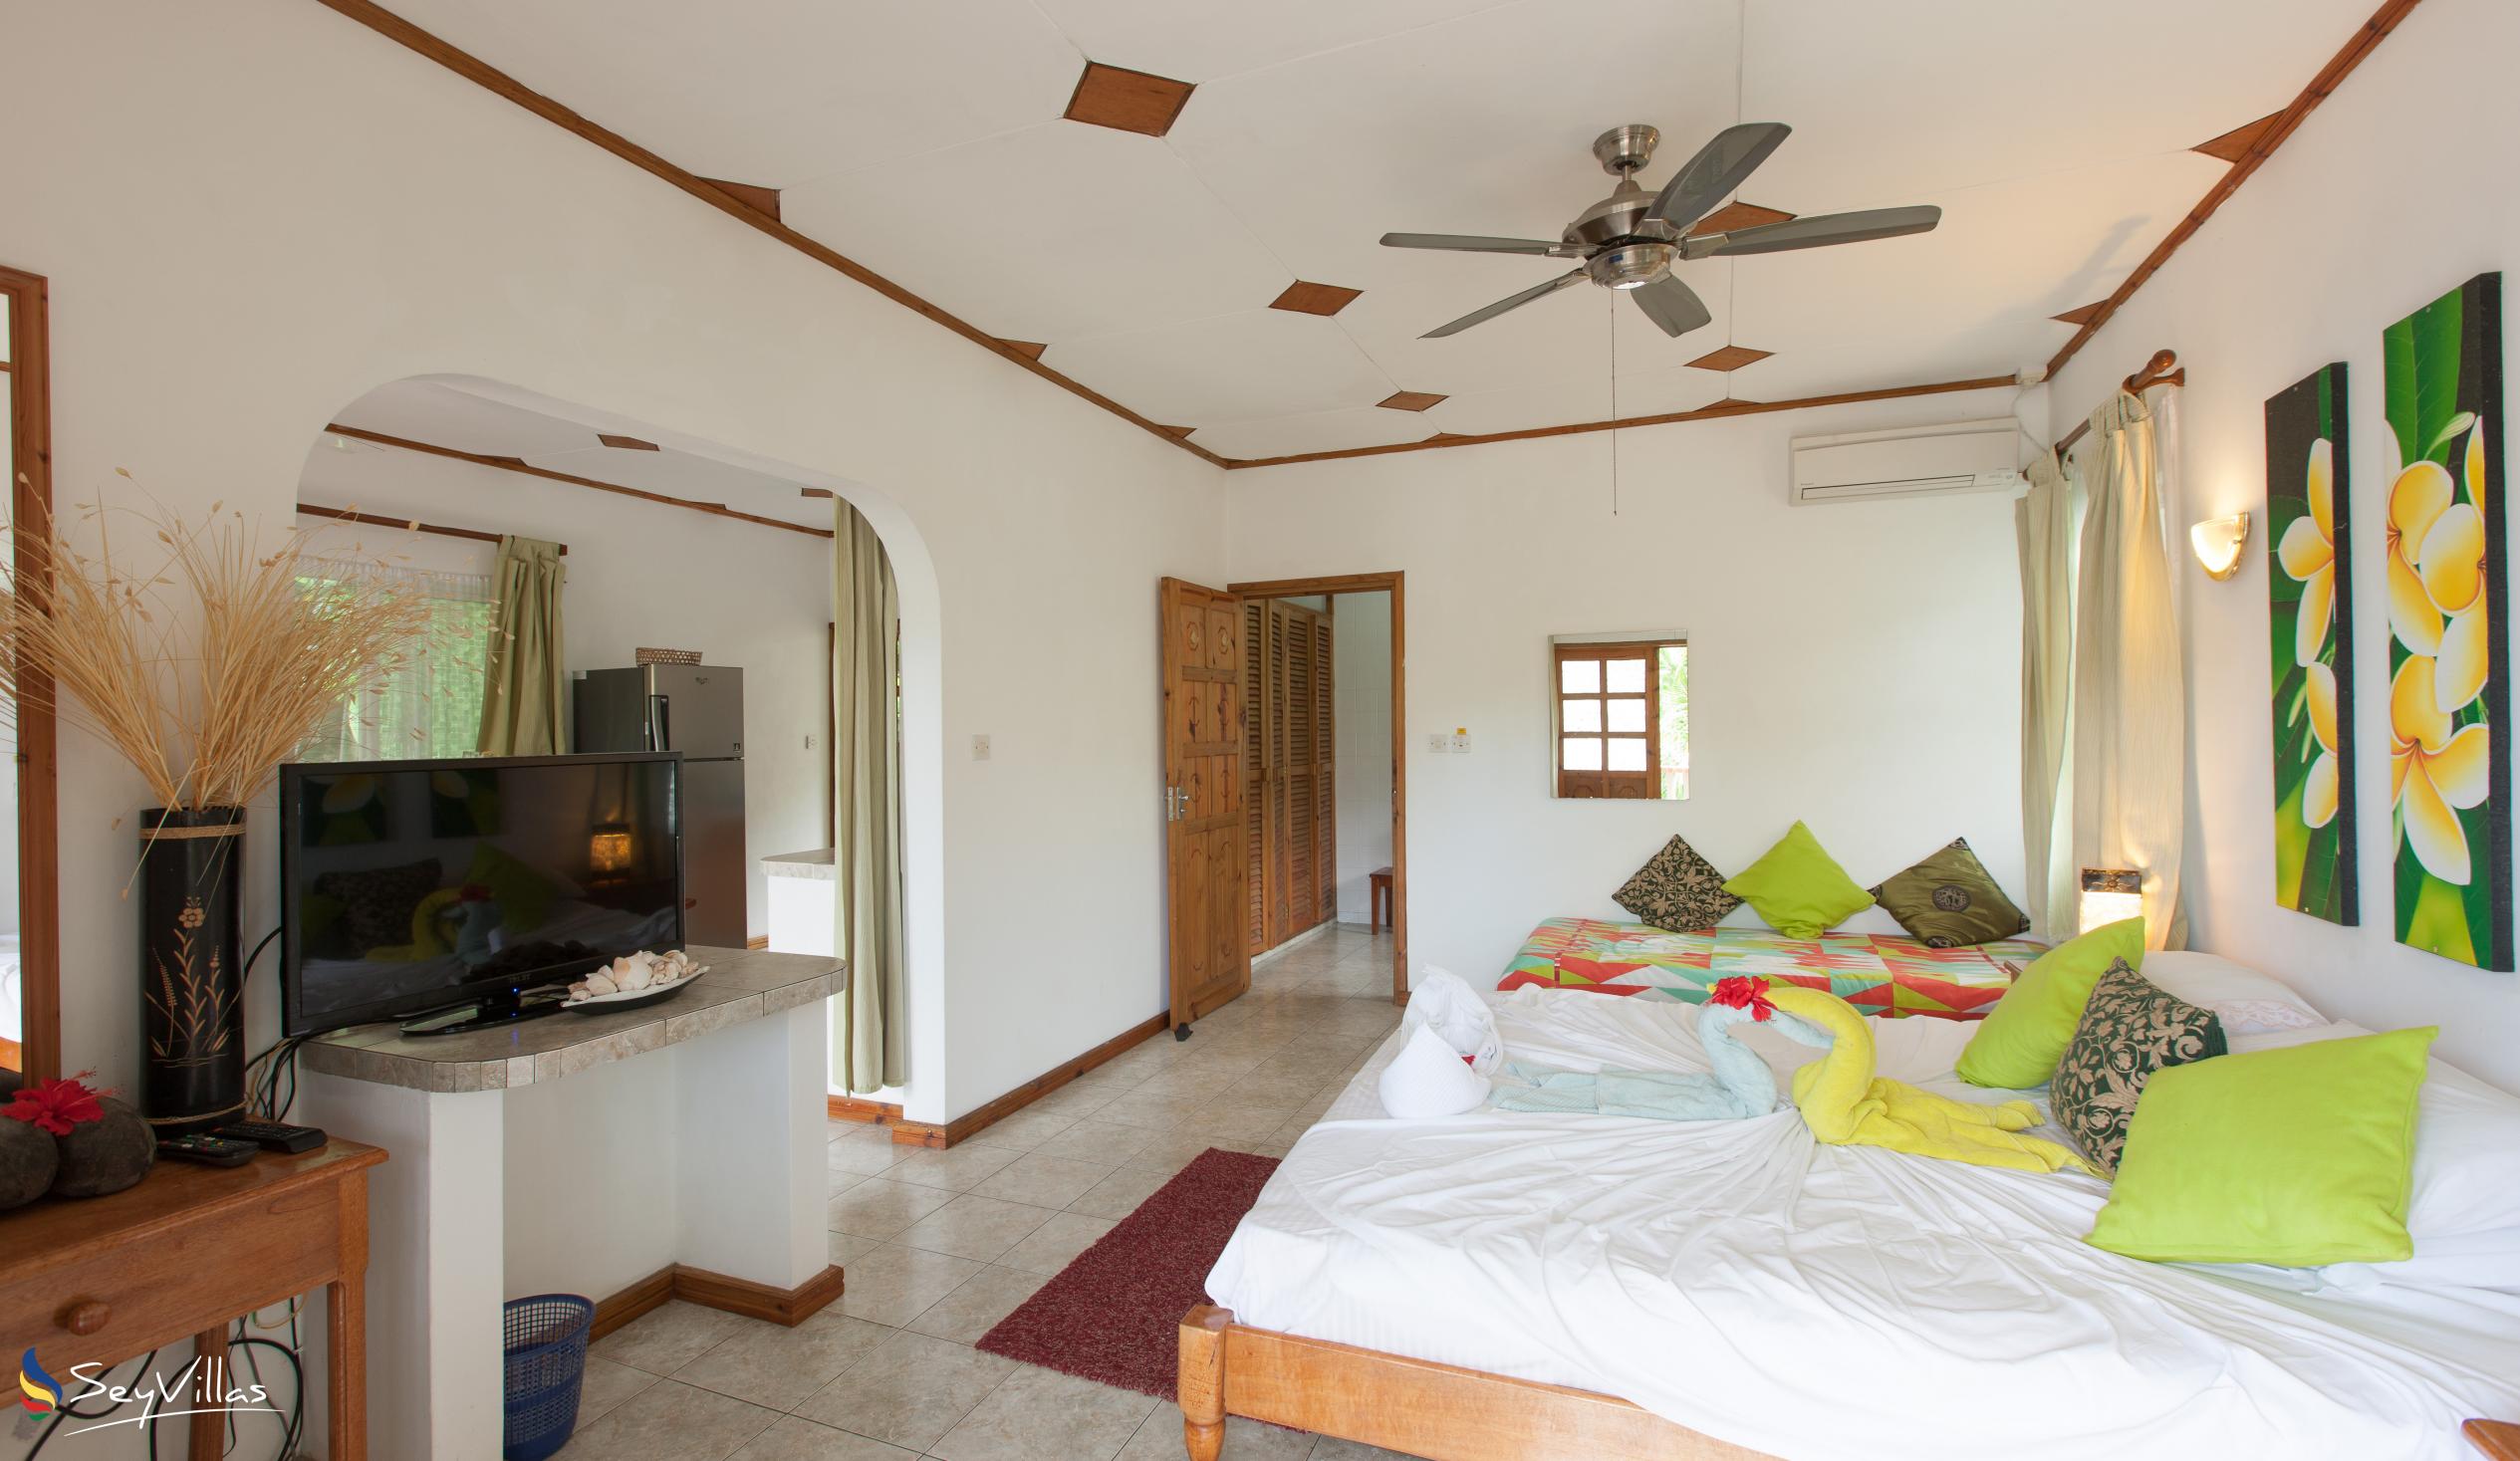 Foto 113: Sea View Lodge - Villetta su palafitte - Praslin (Seychelles)